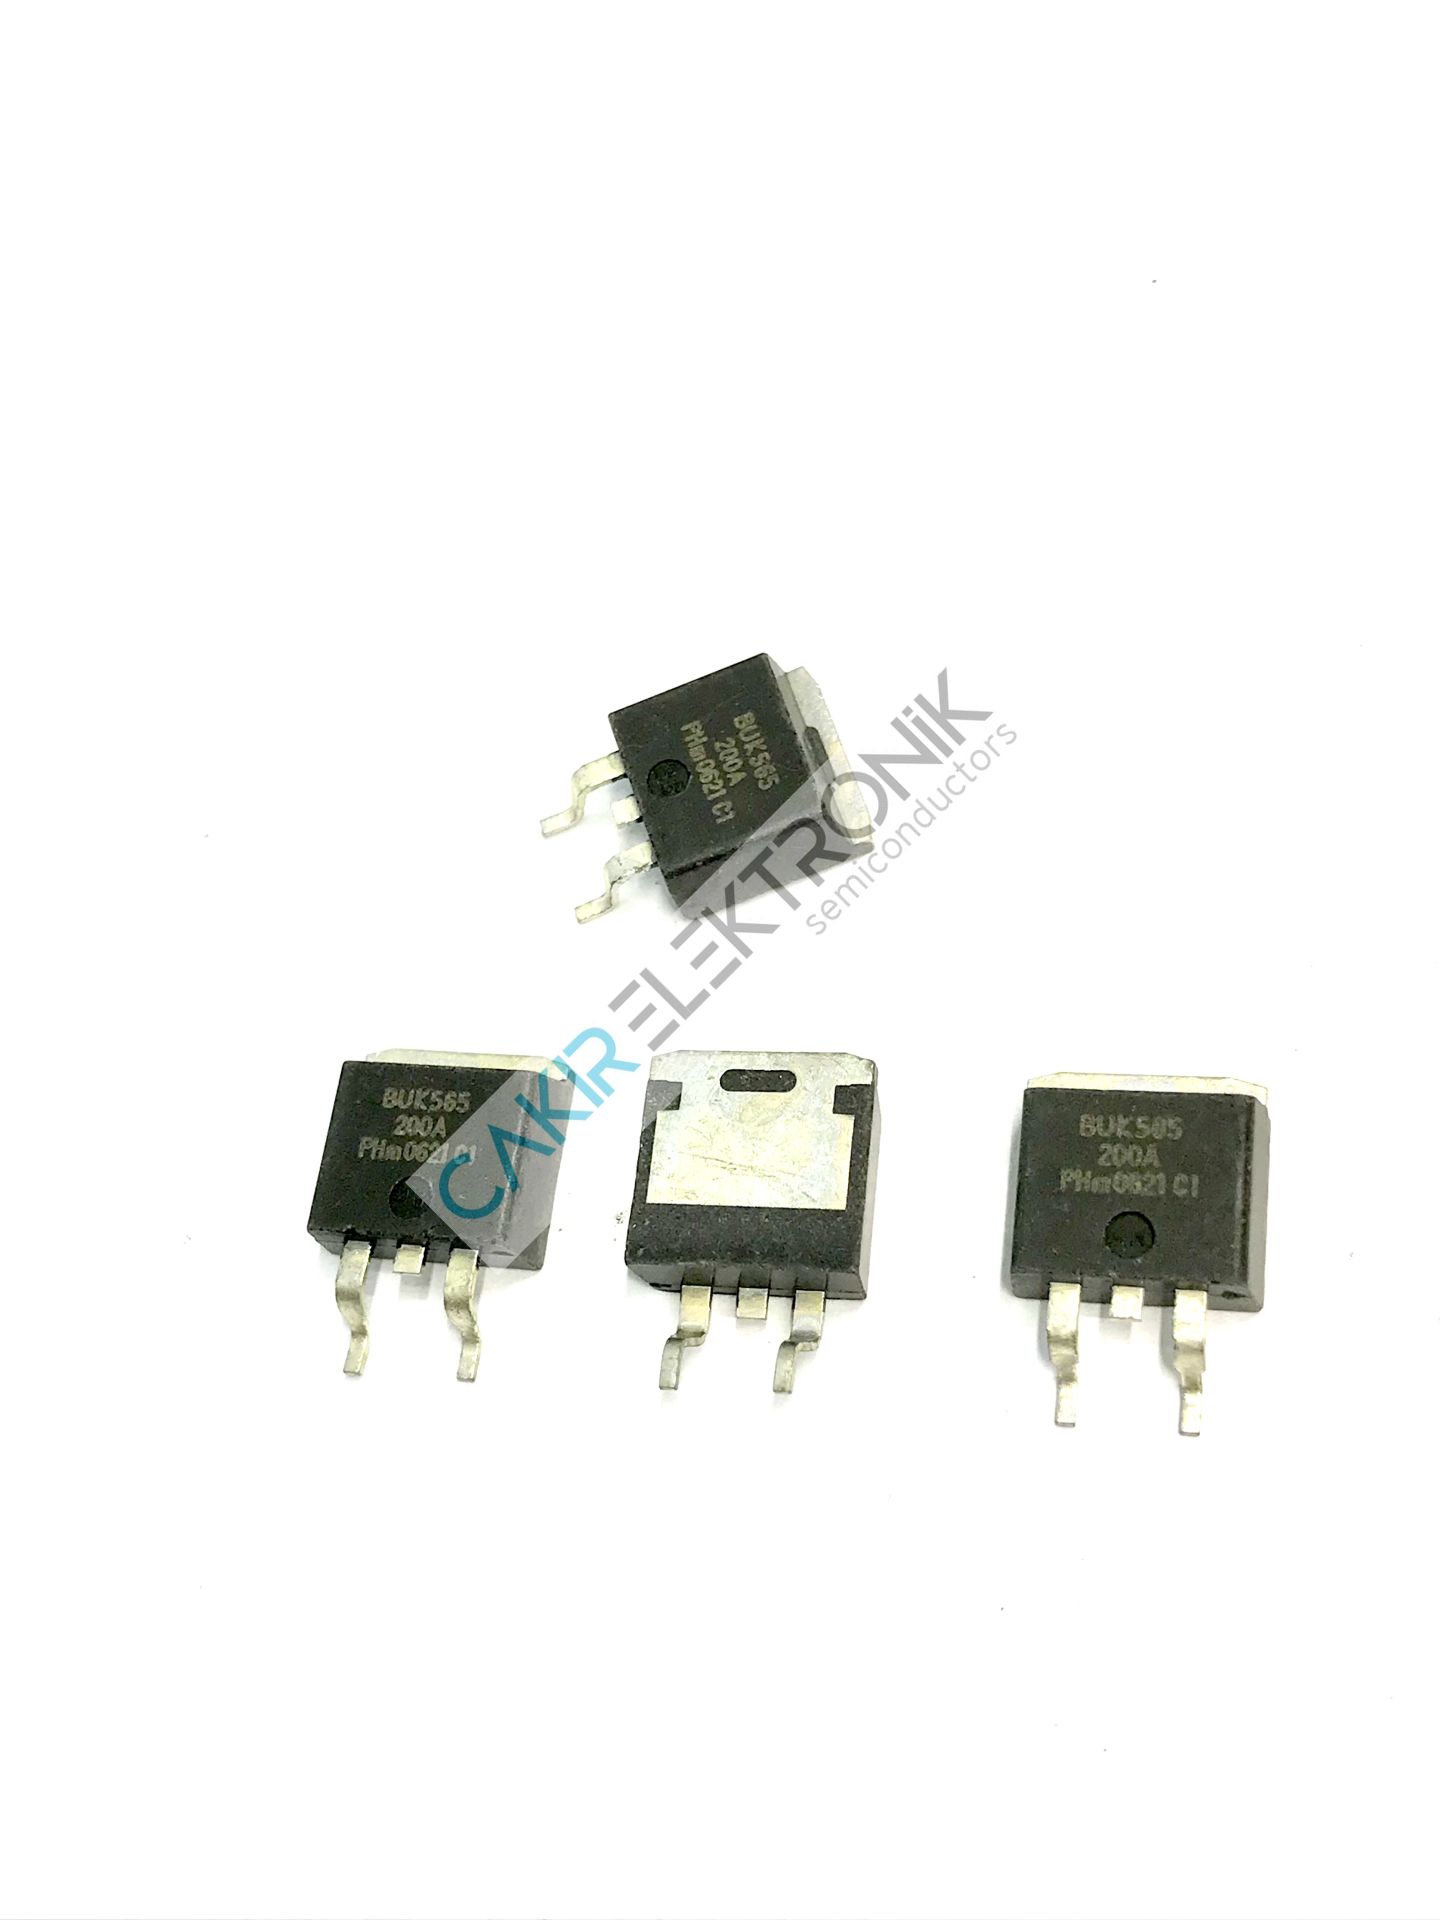 BUK565-200A - BUK565 - 14A. 200V. TO263  PowerMOS transistor  Logic level FET